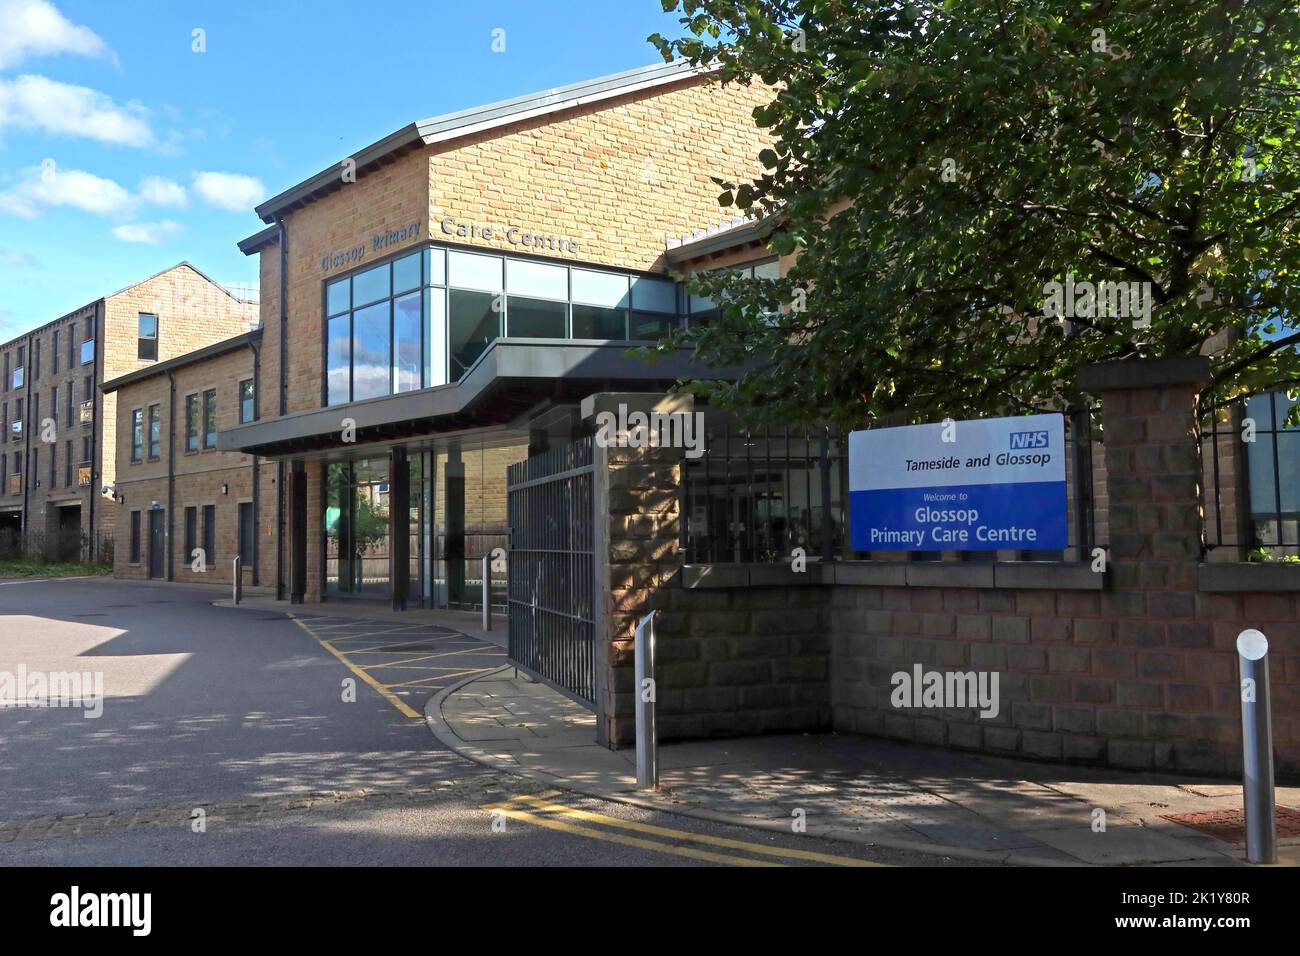 NHS Tameside et Glossop, Centre de soins primaires, fondation fiduciaire, George Street, Glossop, High Peak, Derbyshire, Angleterre, Royaume-Uni, SK13 8AY Banque D'Images